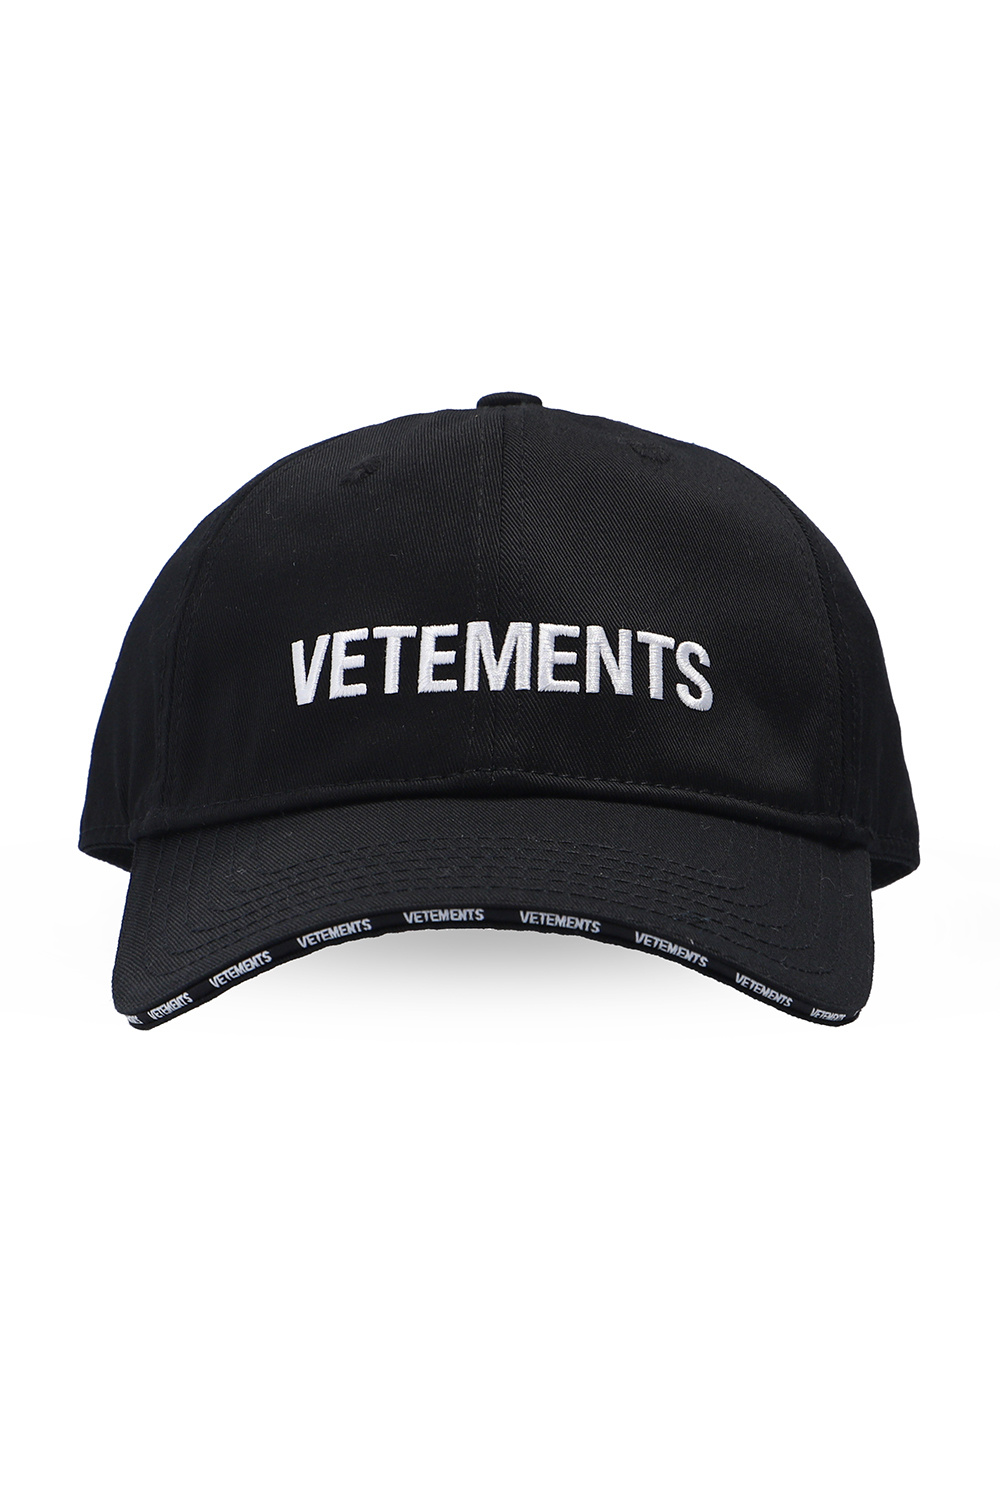 hat men s lighters Knitwear Jacobs VETEMENTS Black Marc IetpShops The GB - cap - Traveler embroidered